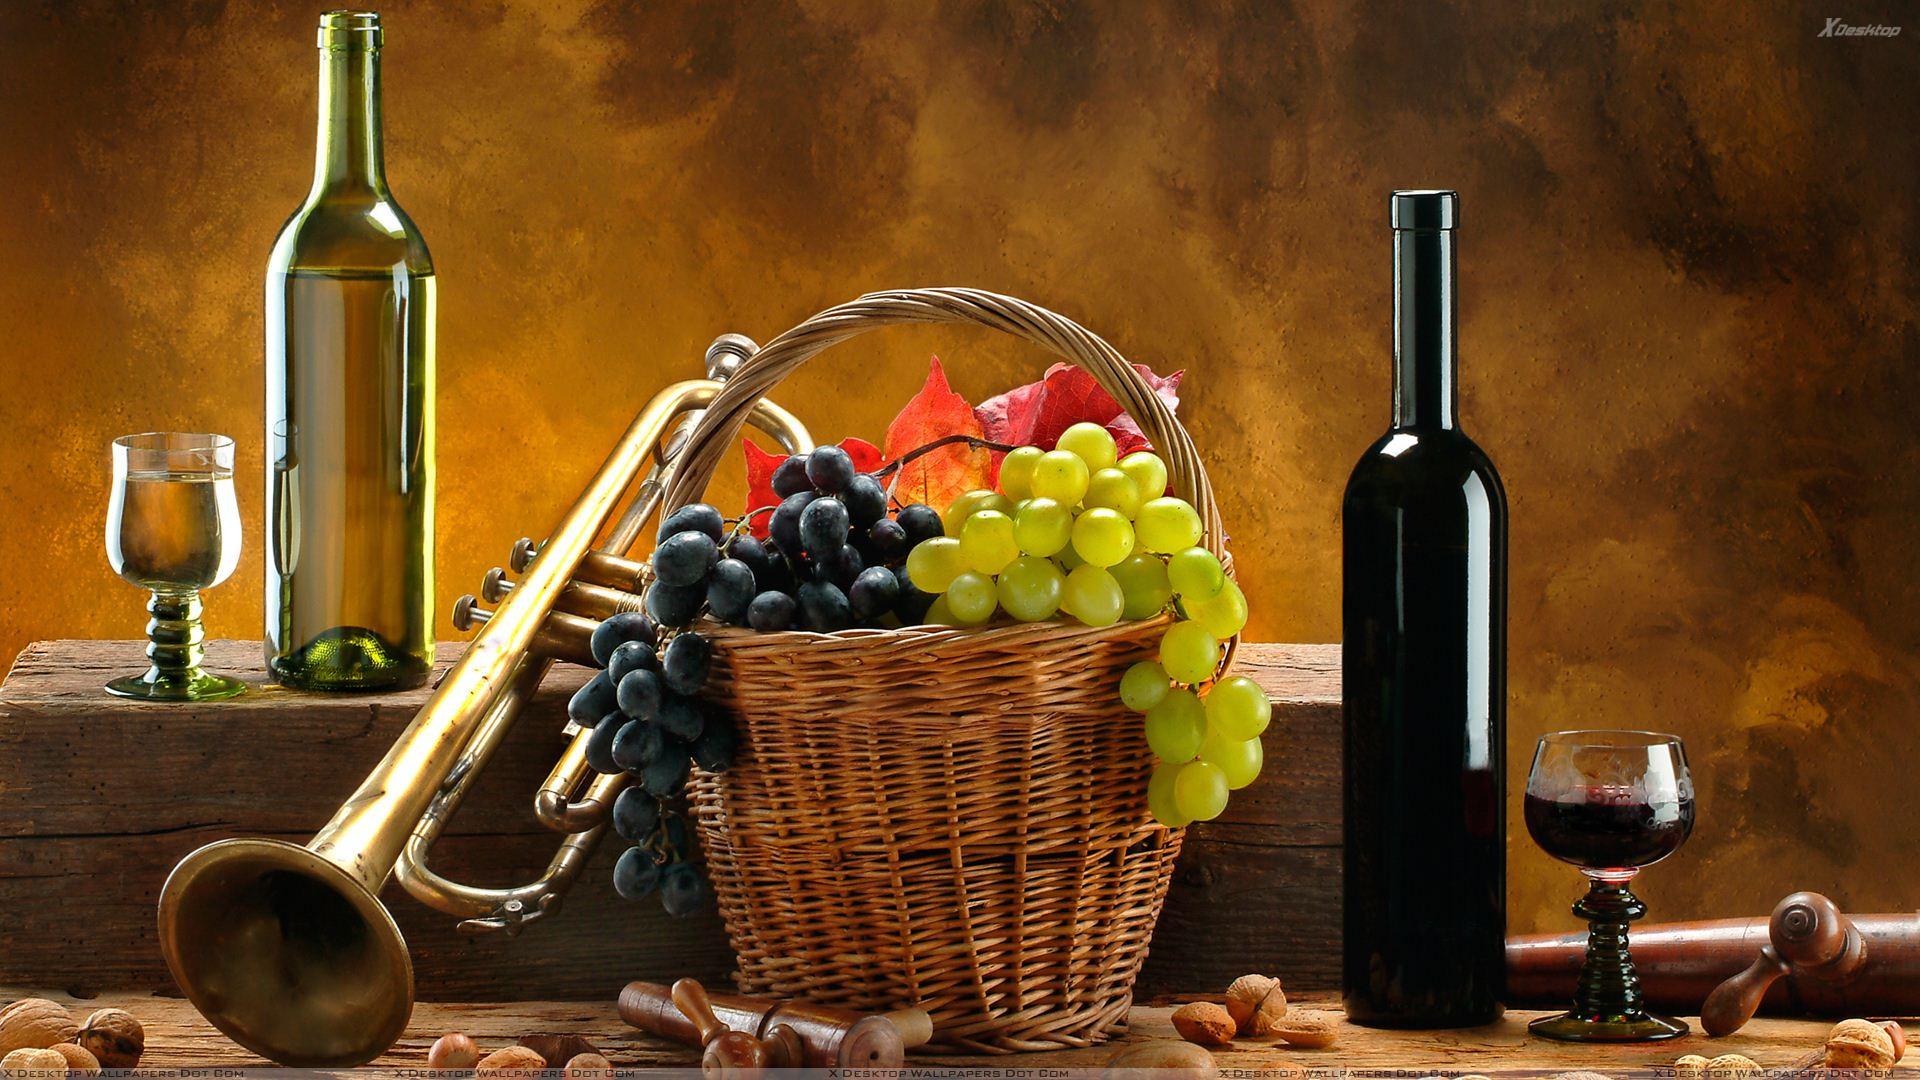 Wine Bottle N Grapes Basket Wallpaper